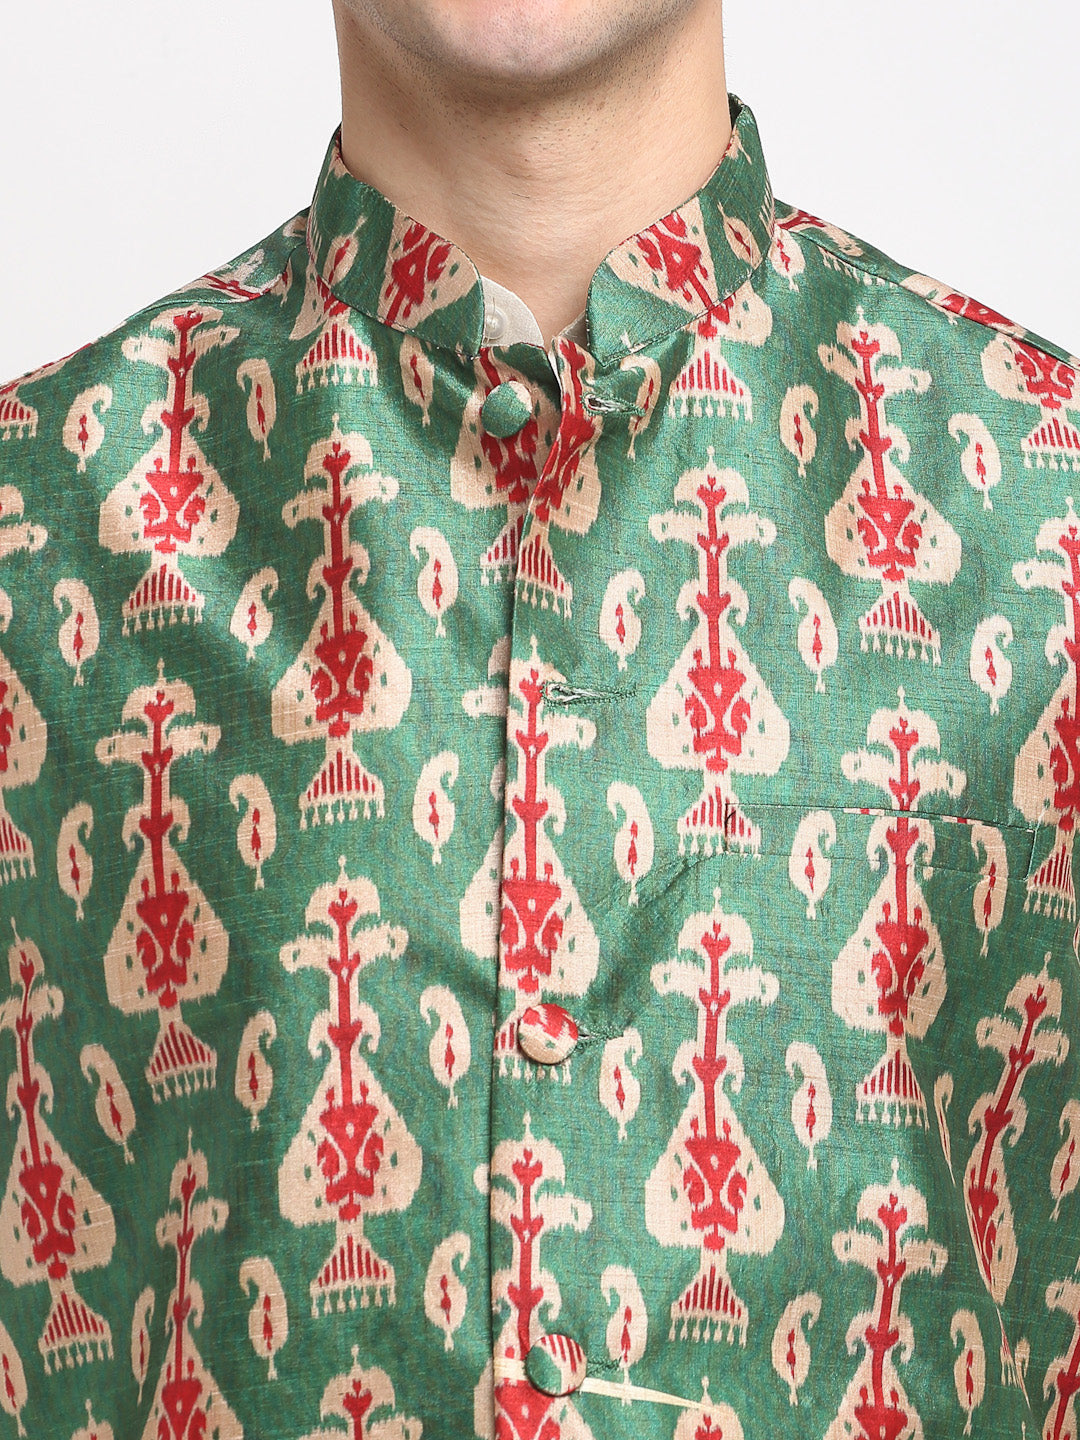 Jompers Men's Green Digital Printed Green Waistcoat